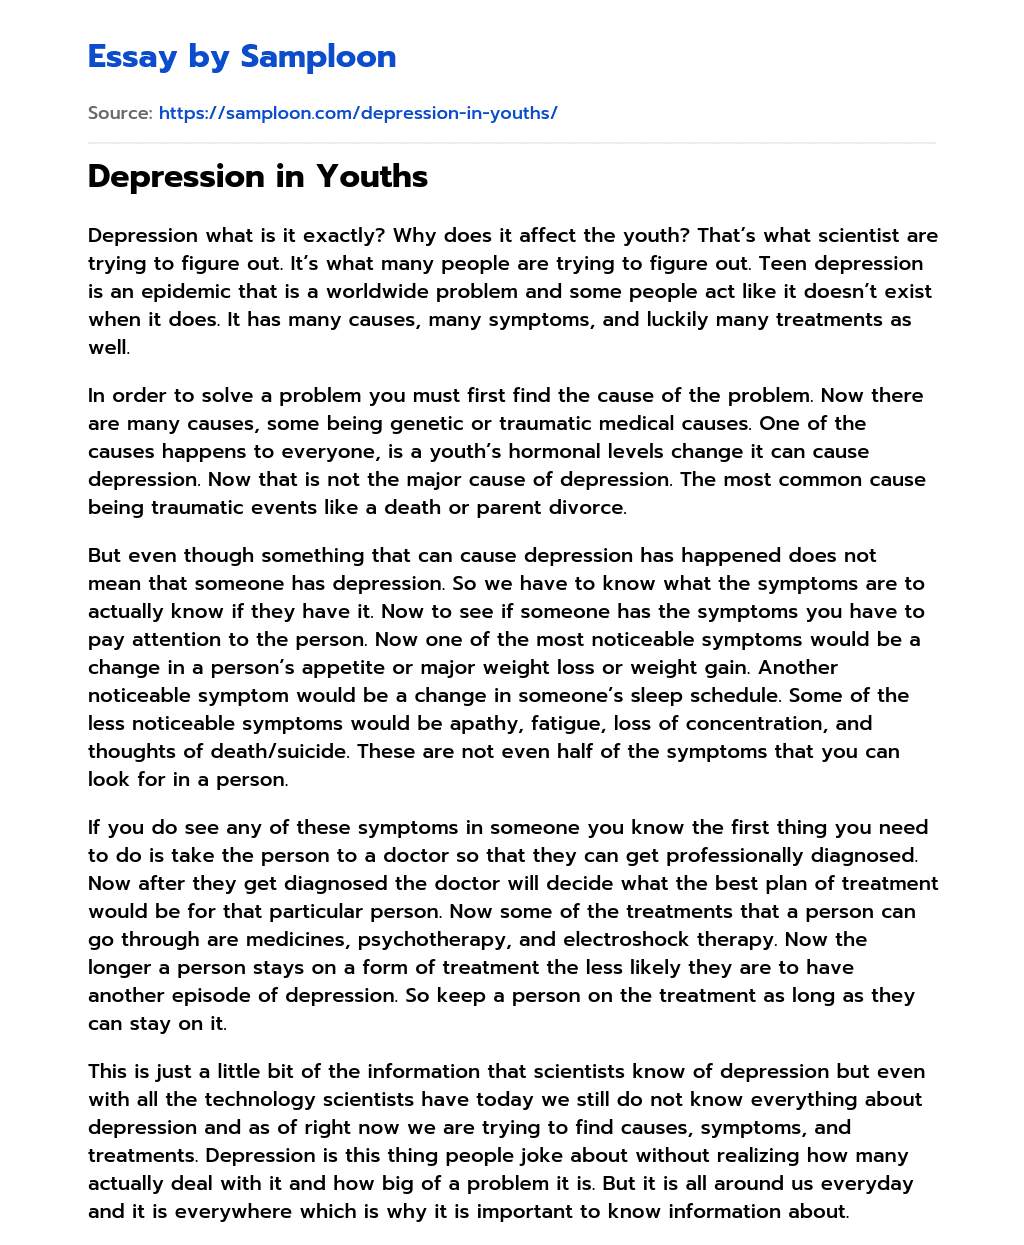 Depression in Youths essay